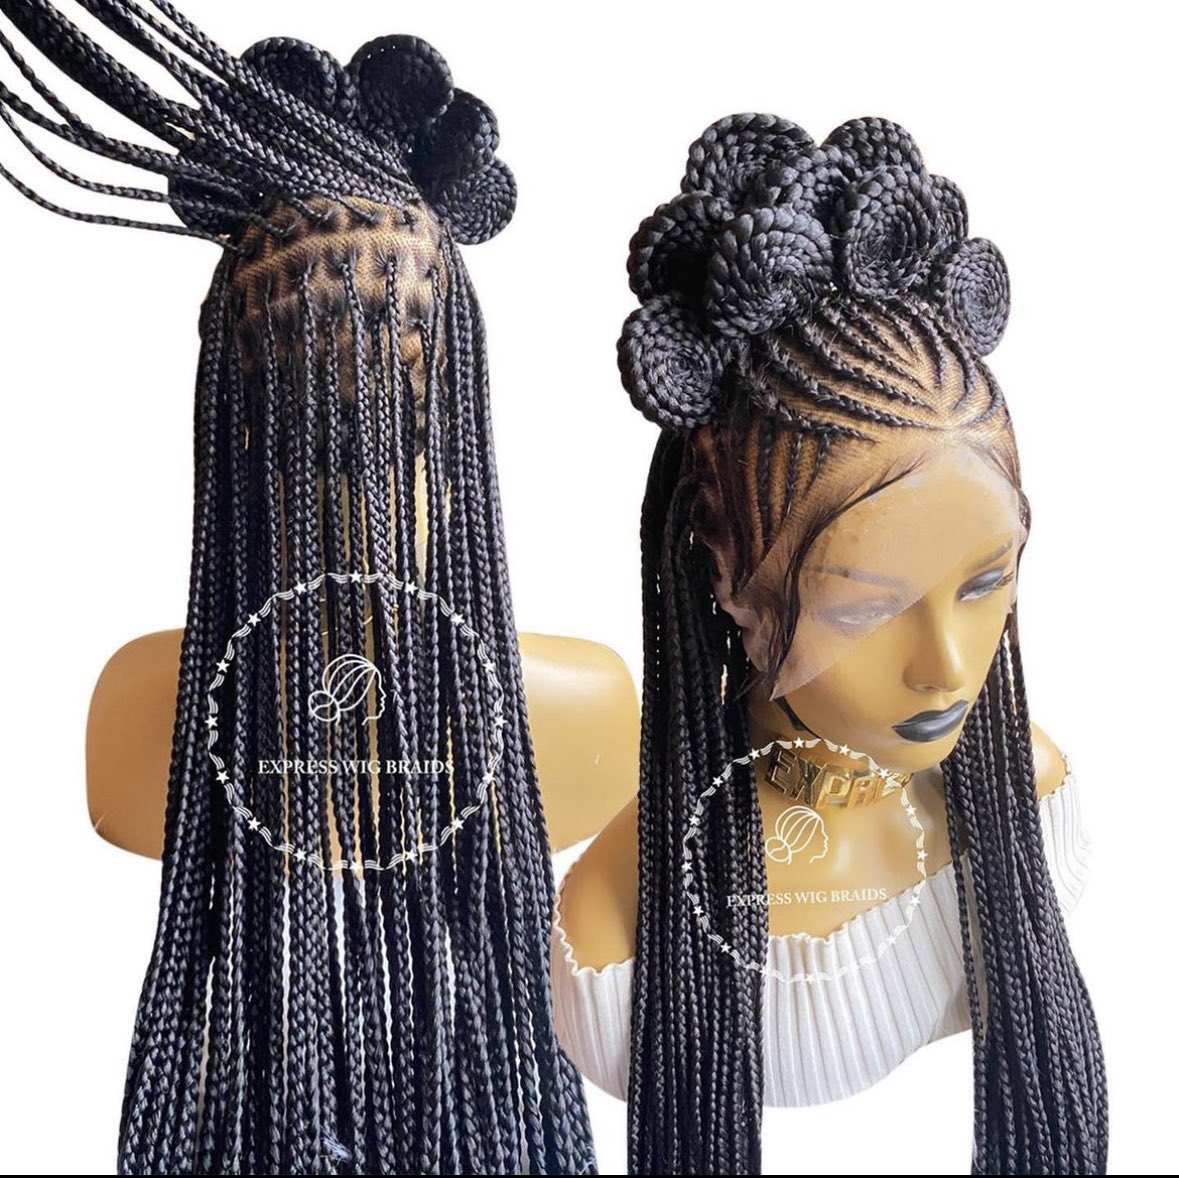 Take extra $30 off code “MDAY30” on all braided wigs at expresswigbraids.com/pages/reviews
.
#expresswigbraids #hair #wigs #wigsforsale #wiginstall #wigsforblackwomen #wigstyling #braids #braidstyles #braidedhairstylesforblackwomen #braidsforblackwomen #cornrows #whitewigs